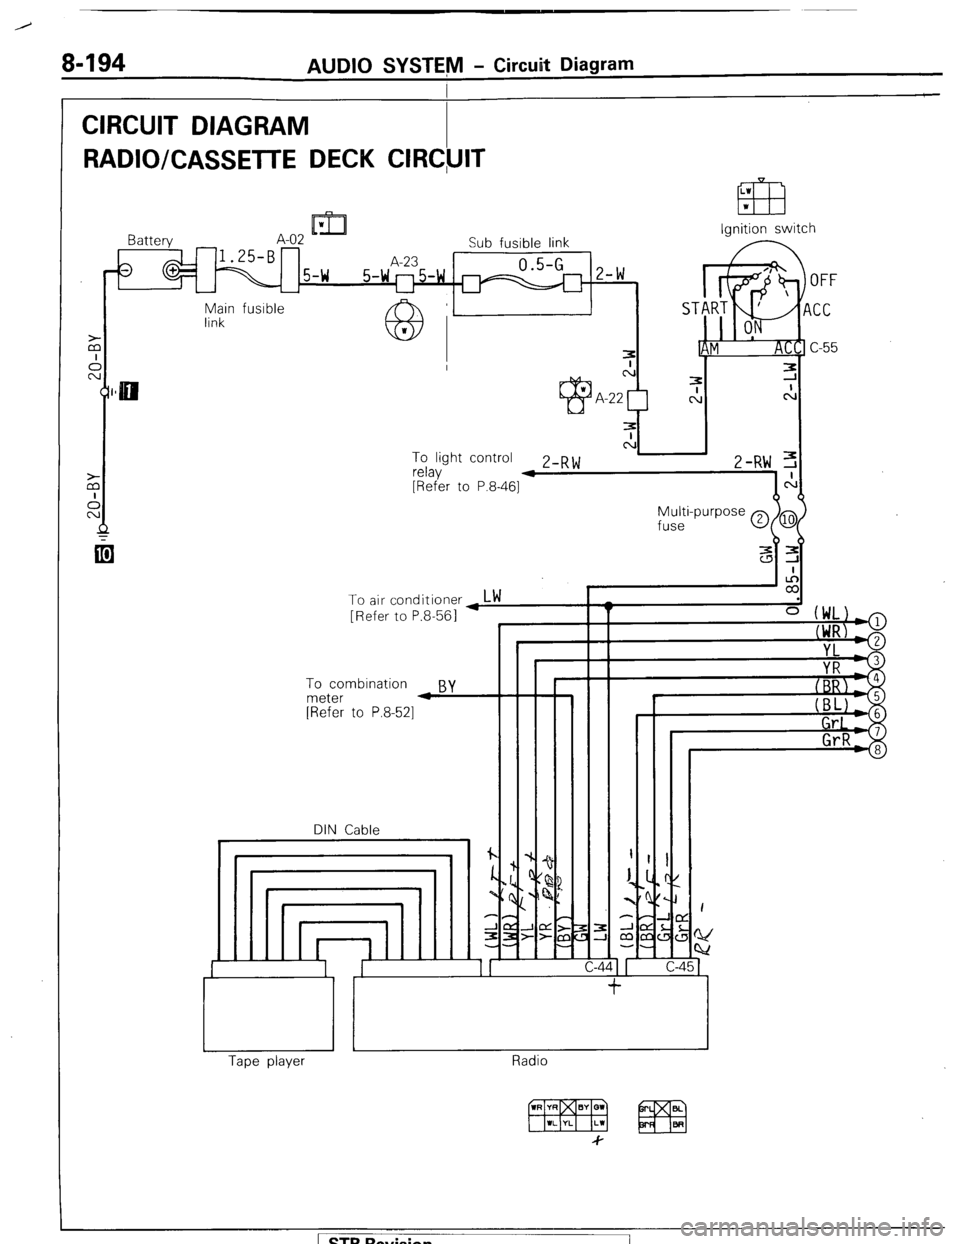 MITSUBISHI MONTERO 1987 1.G Workshop Manual 8-194 AUDIO SYSTEM - Circuit Diagram 
CIRCUIT DIAGRAM 
I 
RADIO/CASSETTE DECK CIRC,UIT 
LW 
033 w 
Ignition switch 
Battery A-02 IL- 
Sub fusible link 
0 1.25-B A-23 0.5-G 2 w 
1 5-w 5-w ll5-w m - 
u 